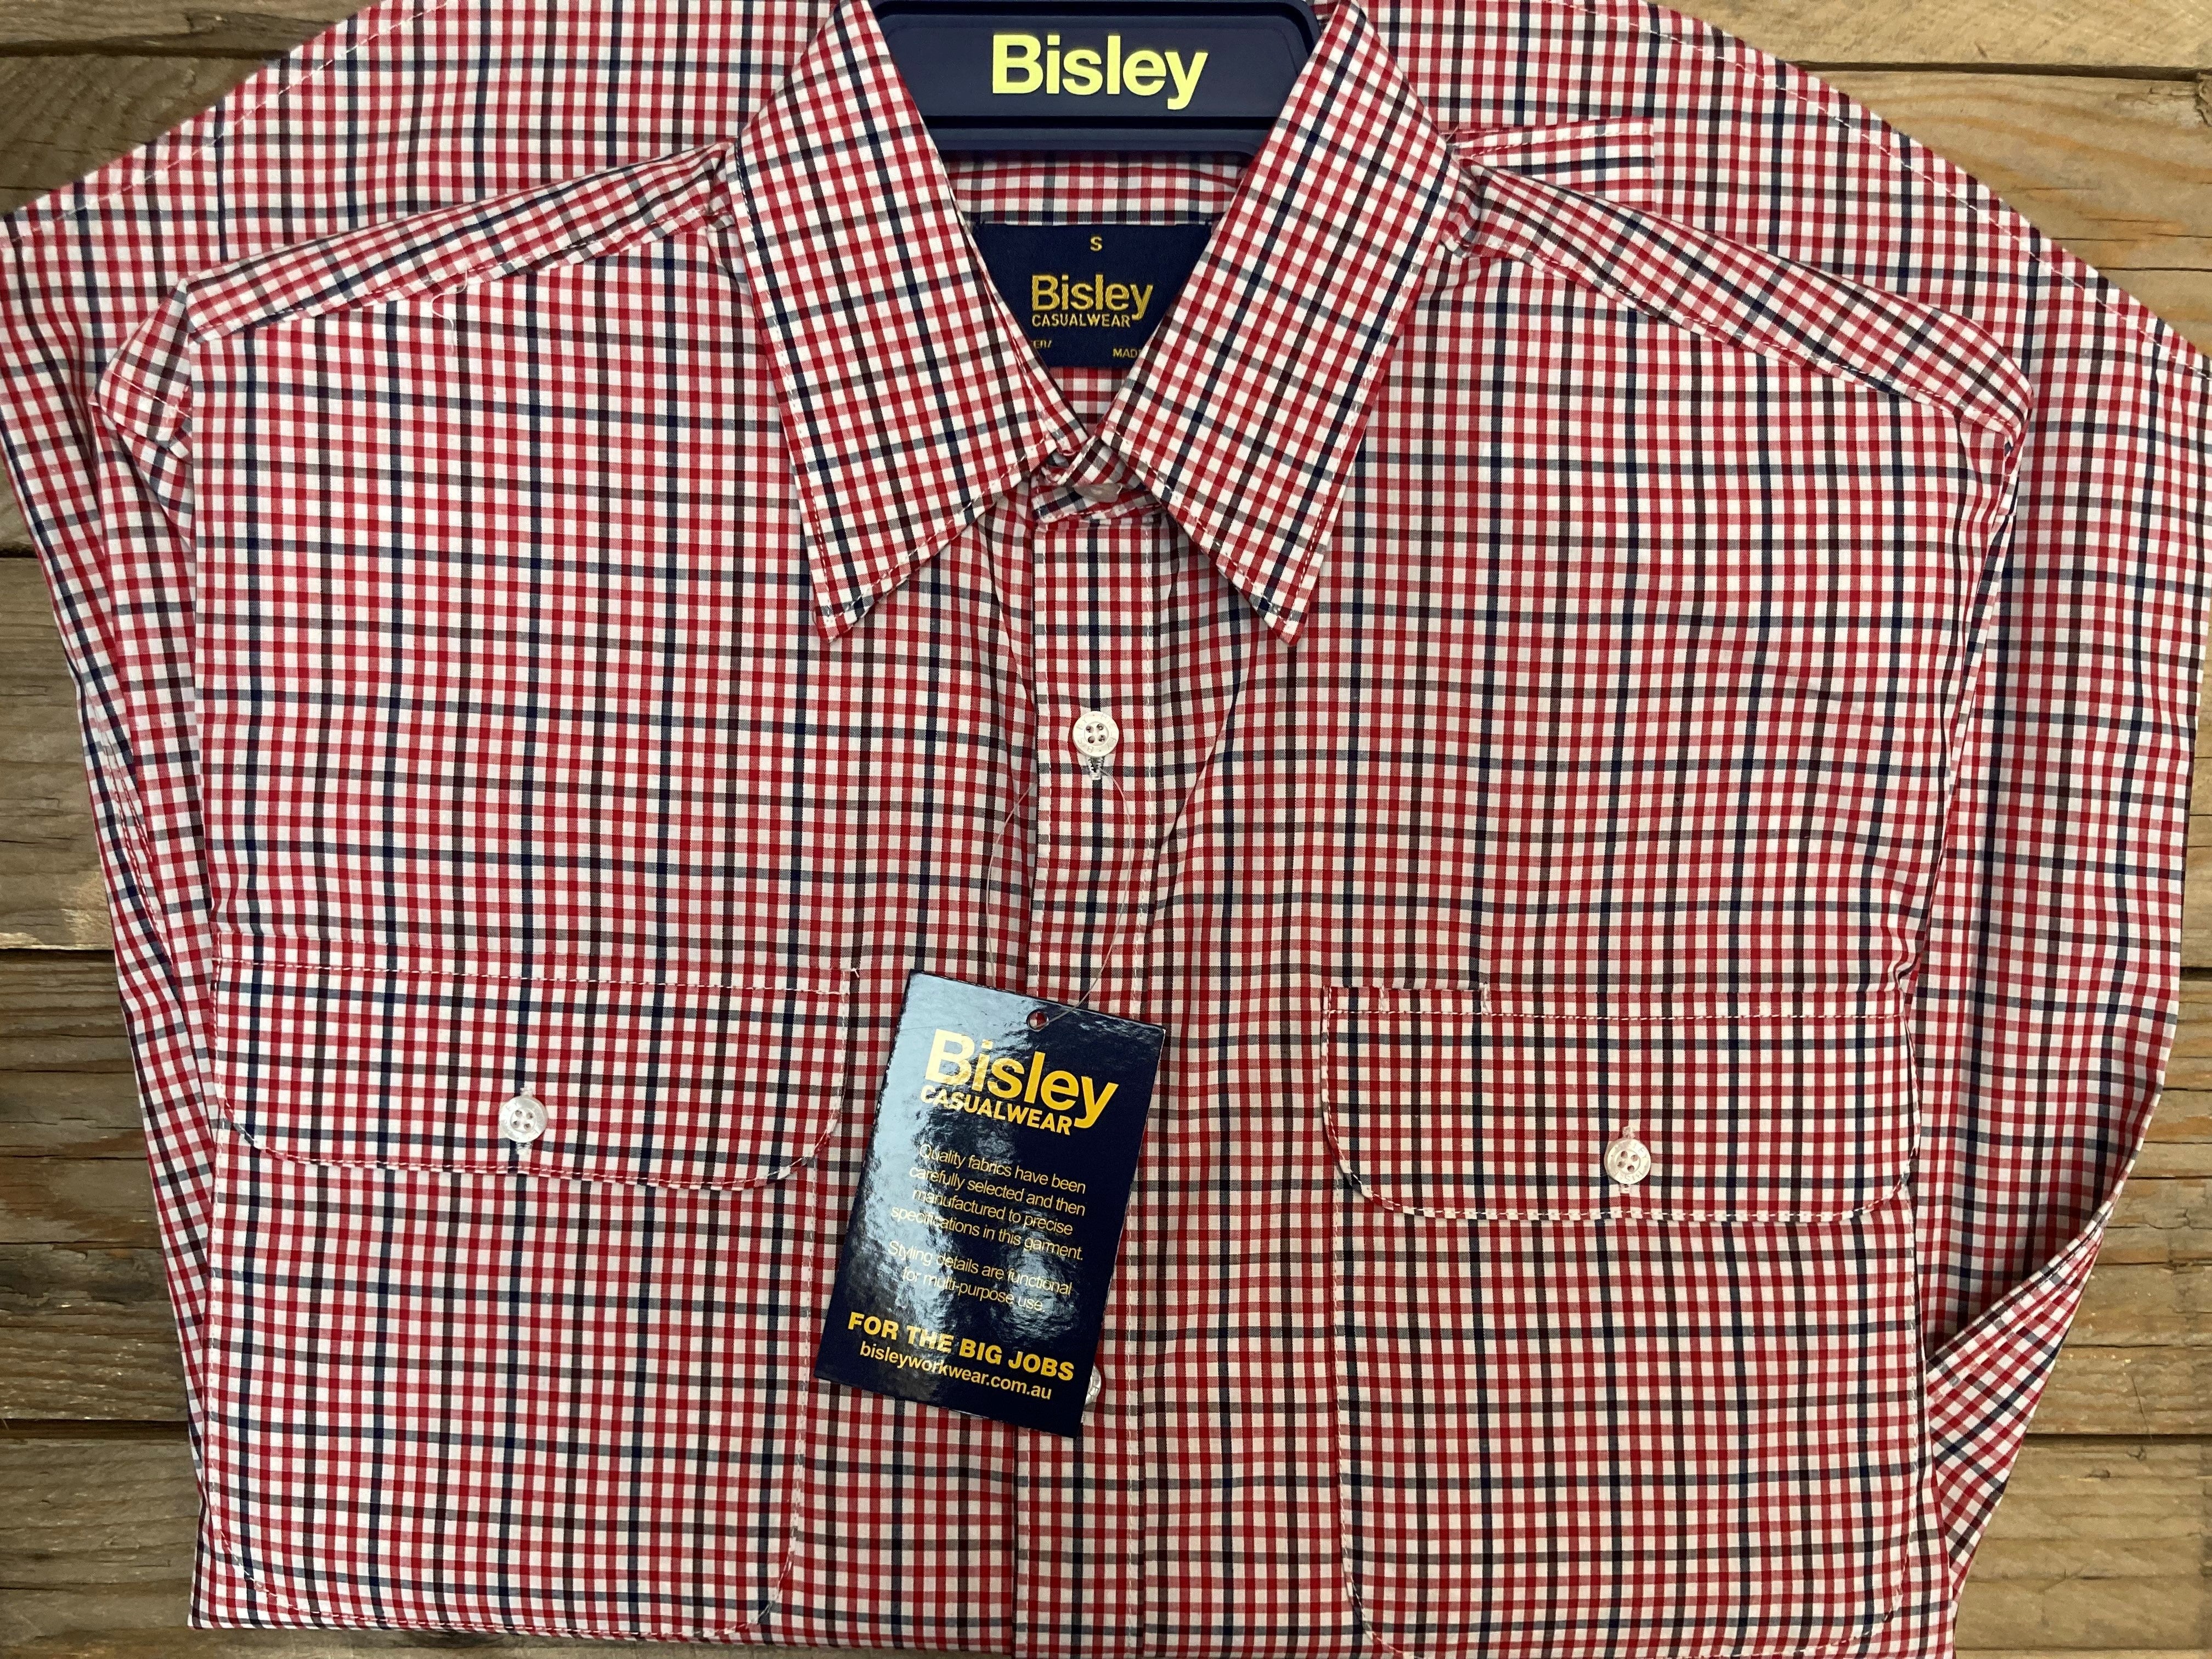 Mens Bisley Small Check Red/White/Black LS Shirt (6904089575501)